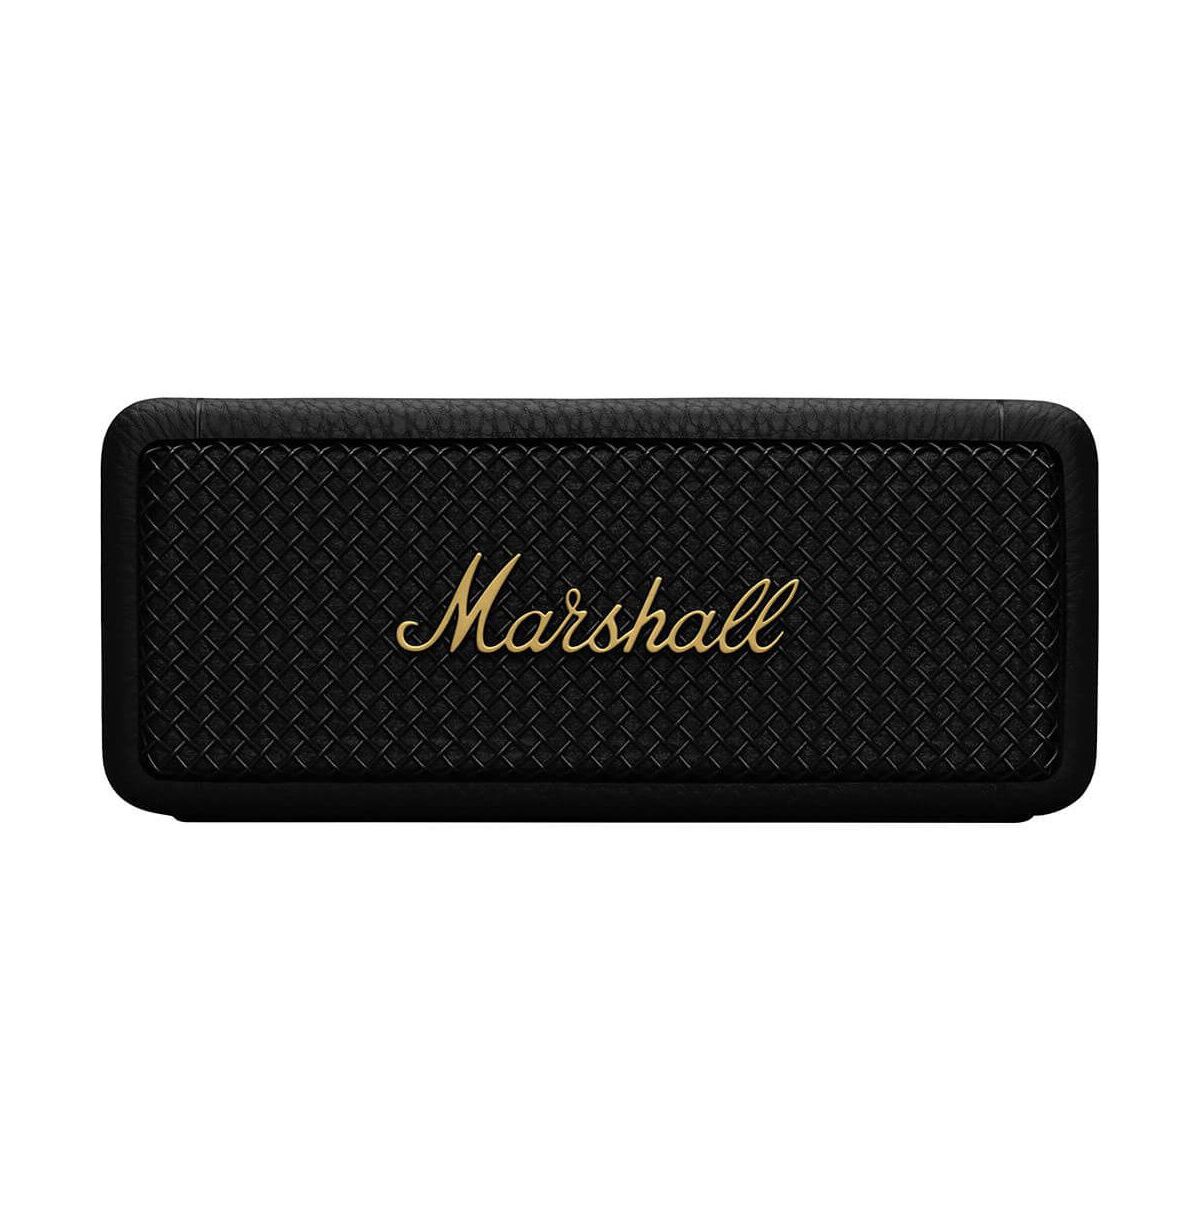 Marshall Emberton Bt Portable Speaker - Black/Brass - Black